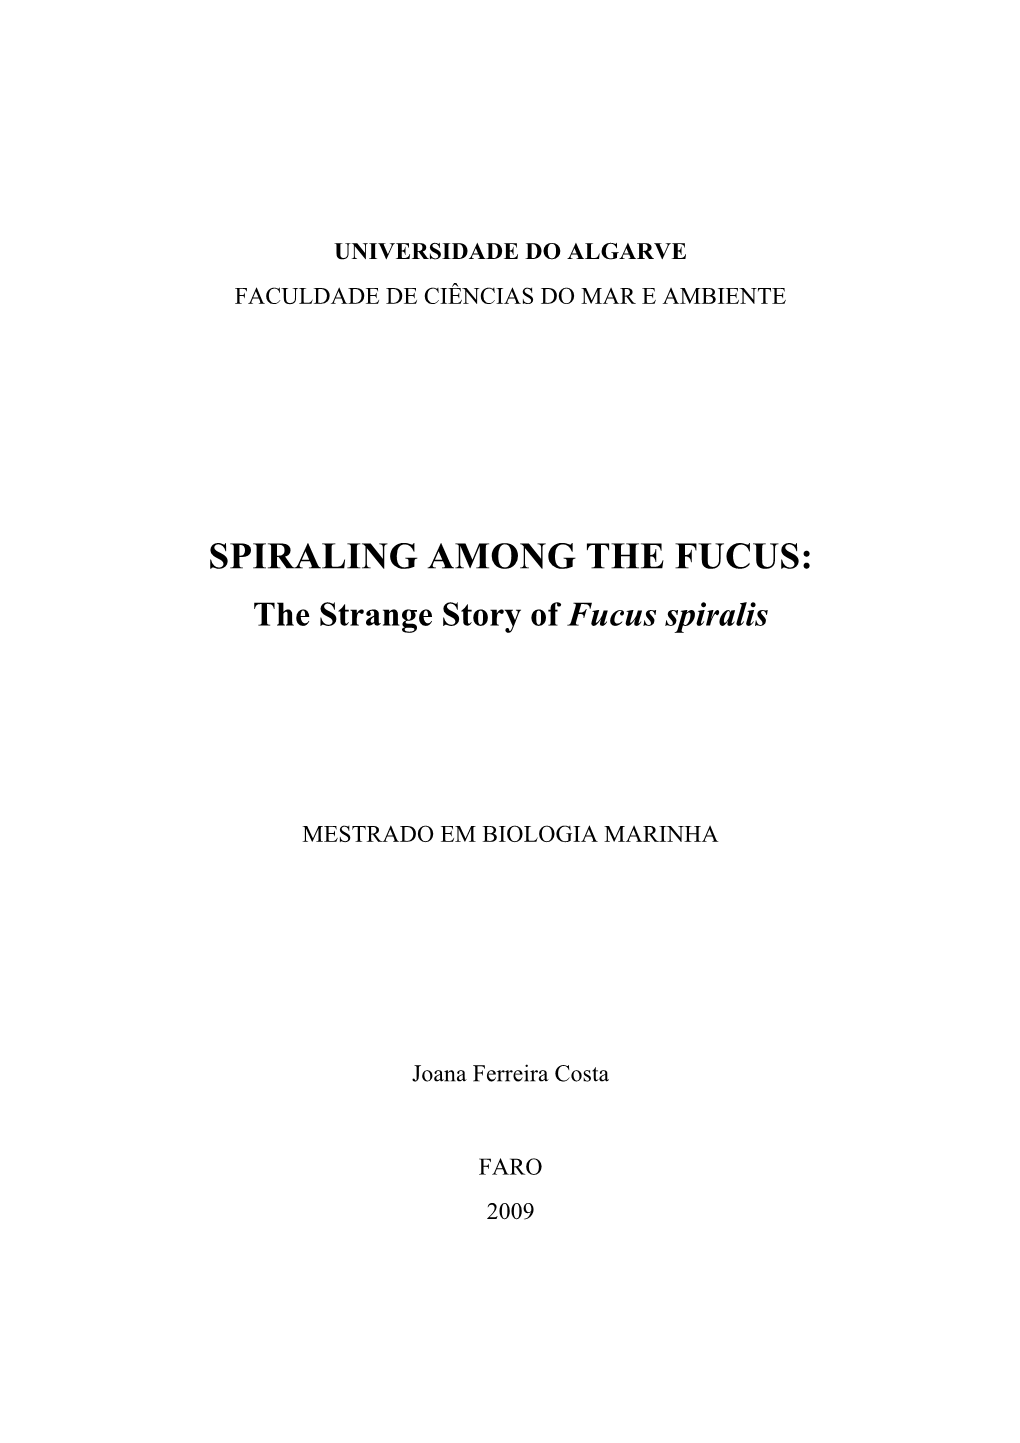 SPIRALING AMONG the FUCUS: the Strange Story of Fucus Spiralis